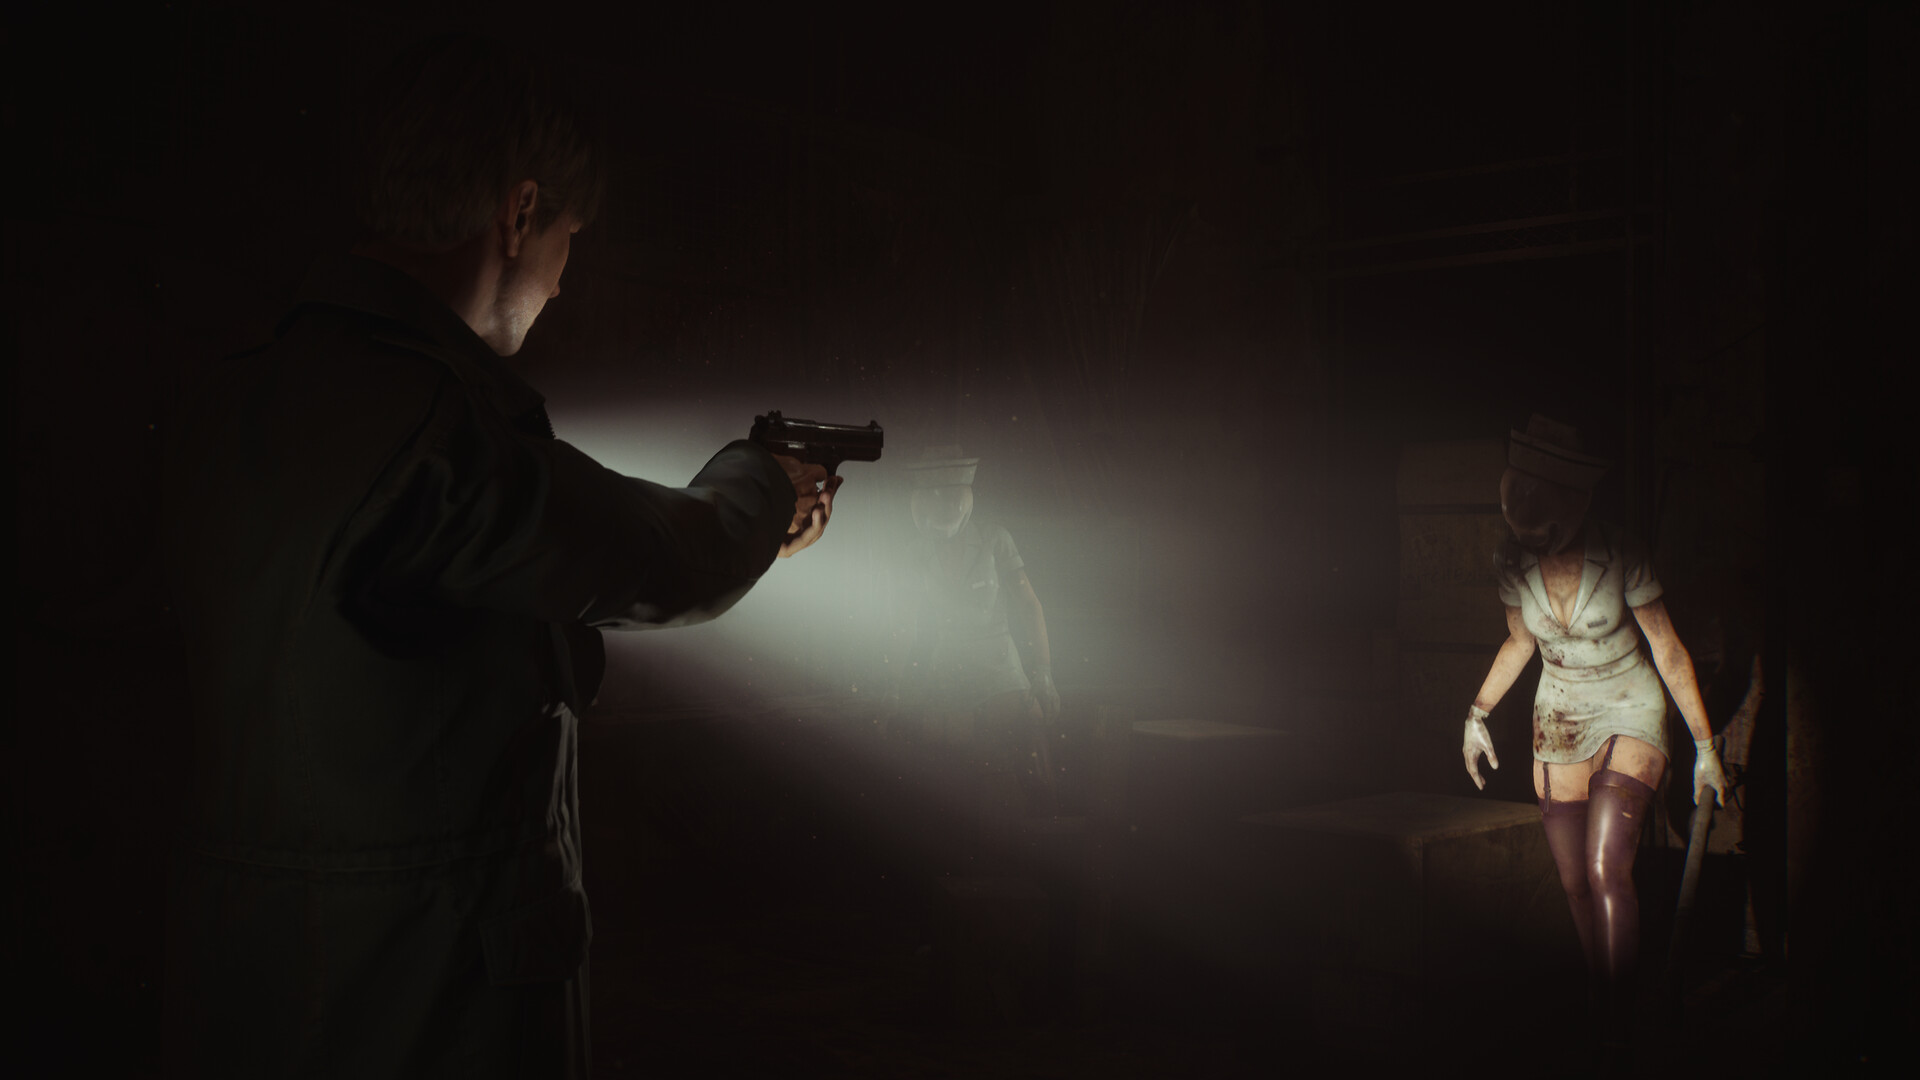 Silent Hill 2 Remake Leaked Image Sparks Debate With Fans - Gameranx